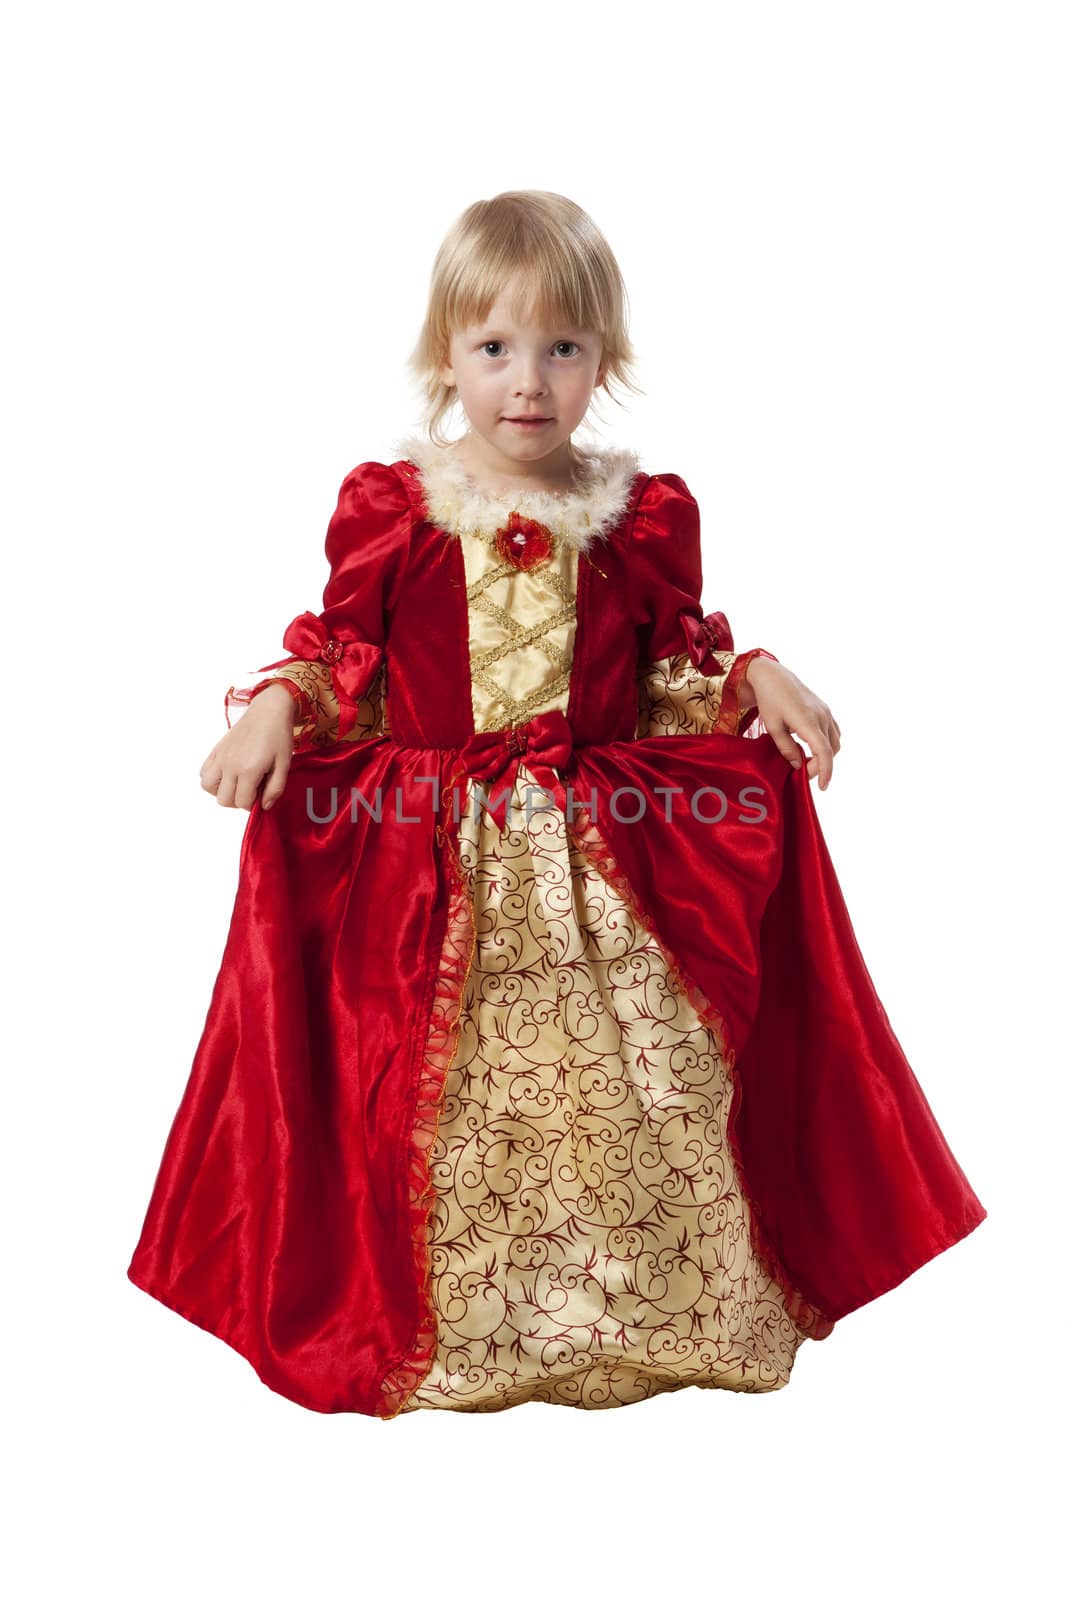 Little girl dressed like a pretty princess